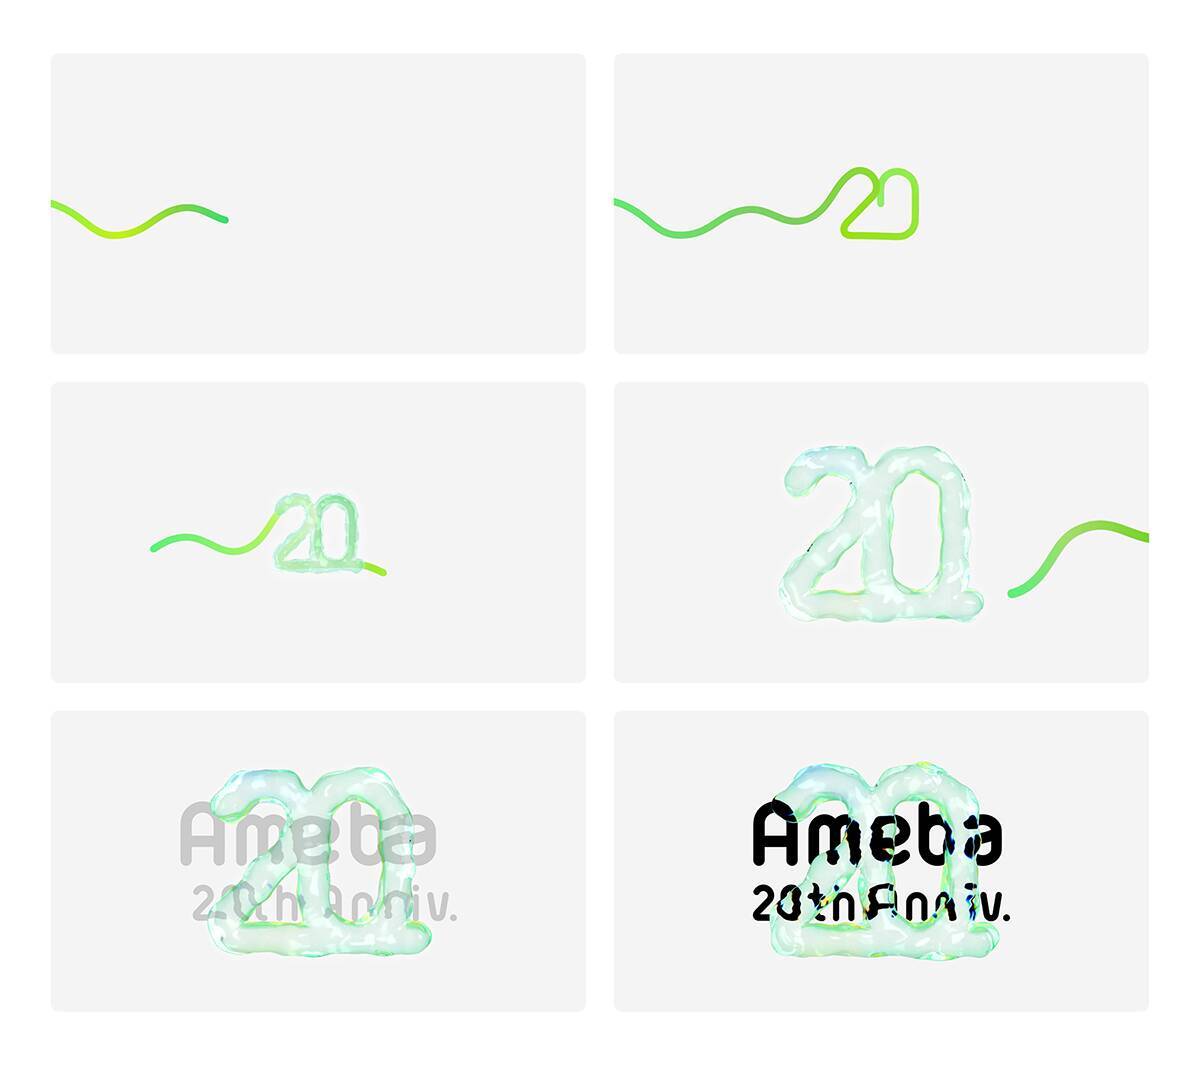 Amebaがサービス開始20周年の特設サイトを公開 ～キービジュアルでは “変化” と “原点” を表現～